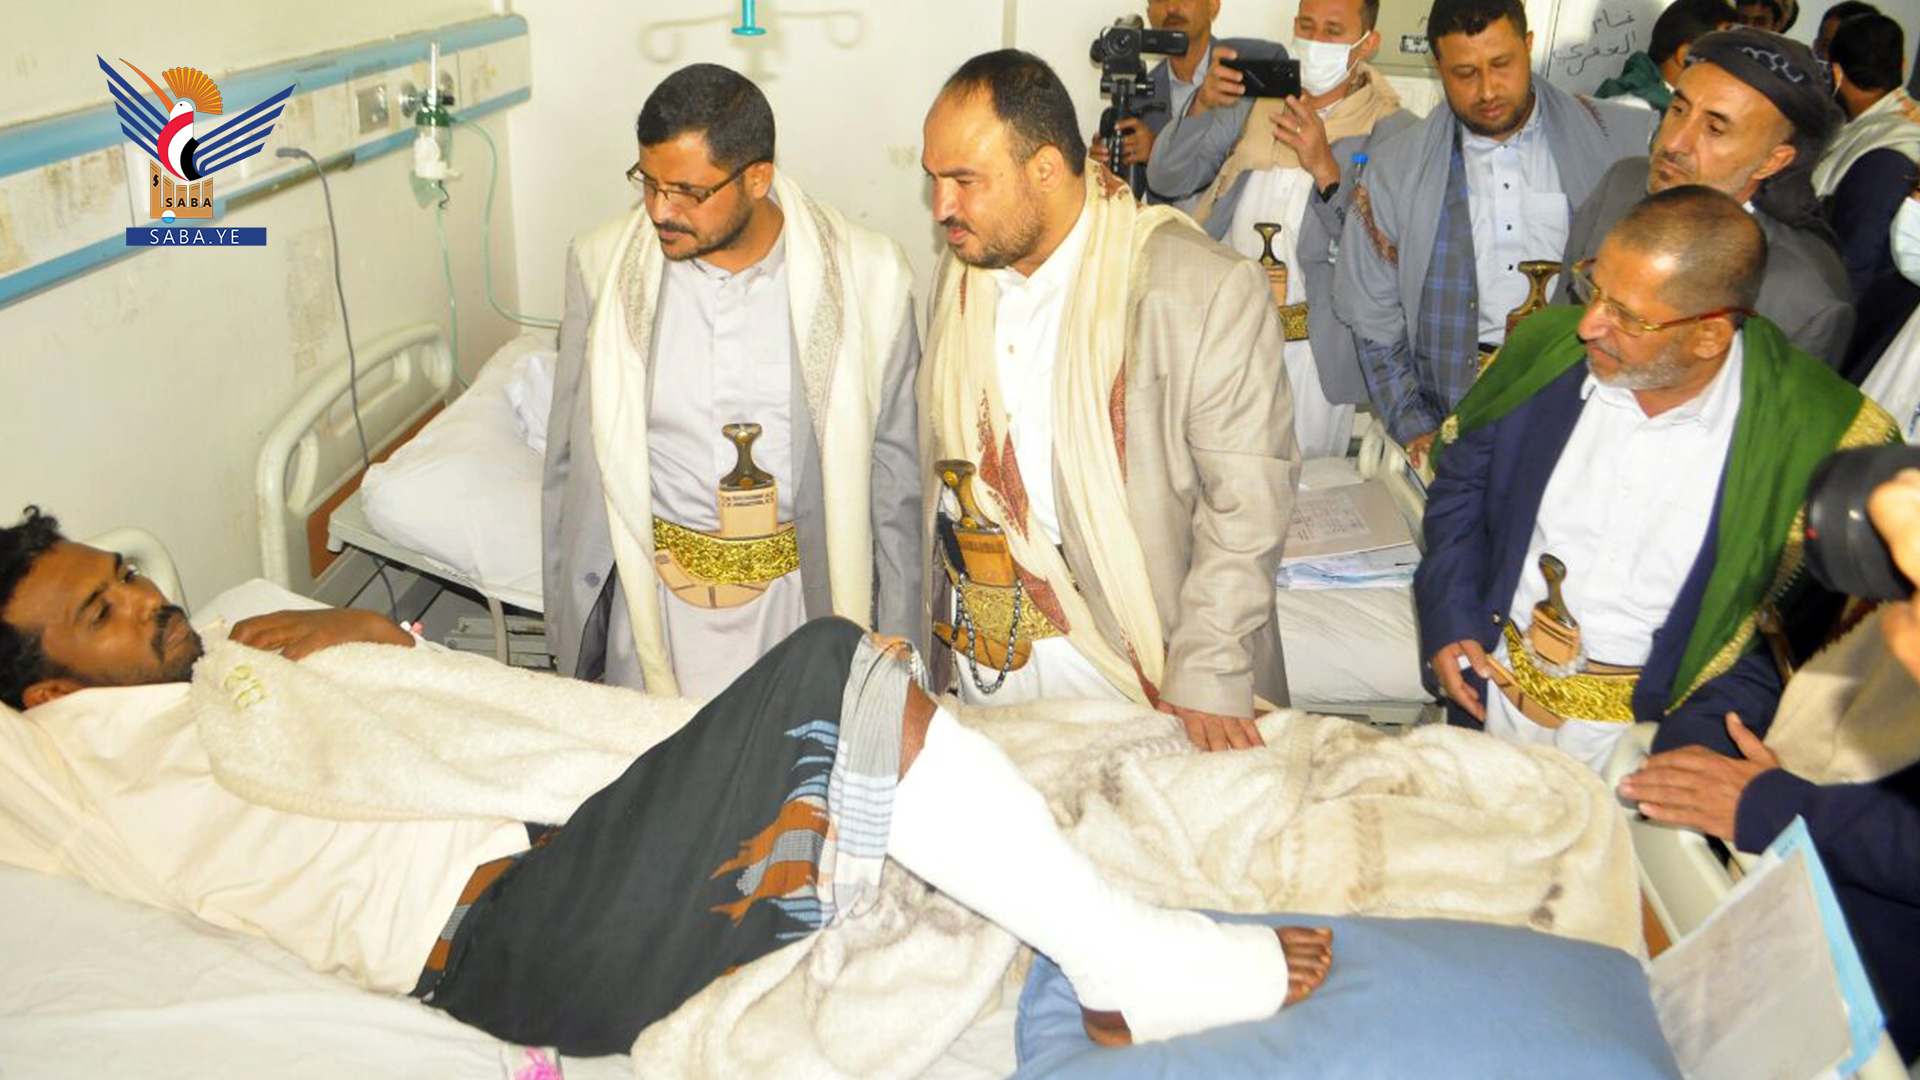 Director of Revolution Leader Office, Sana'a leadership, Zakat Authority visit injured in Hospital 48